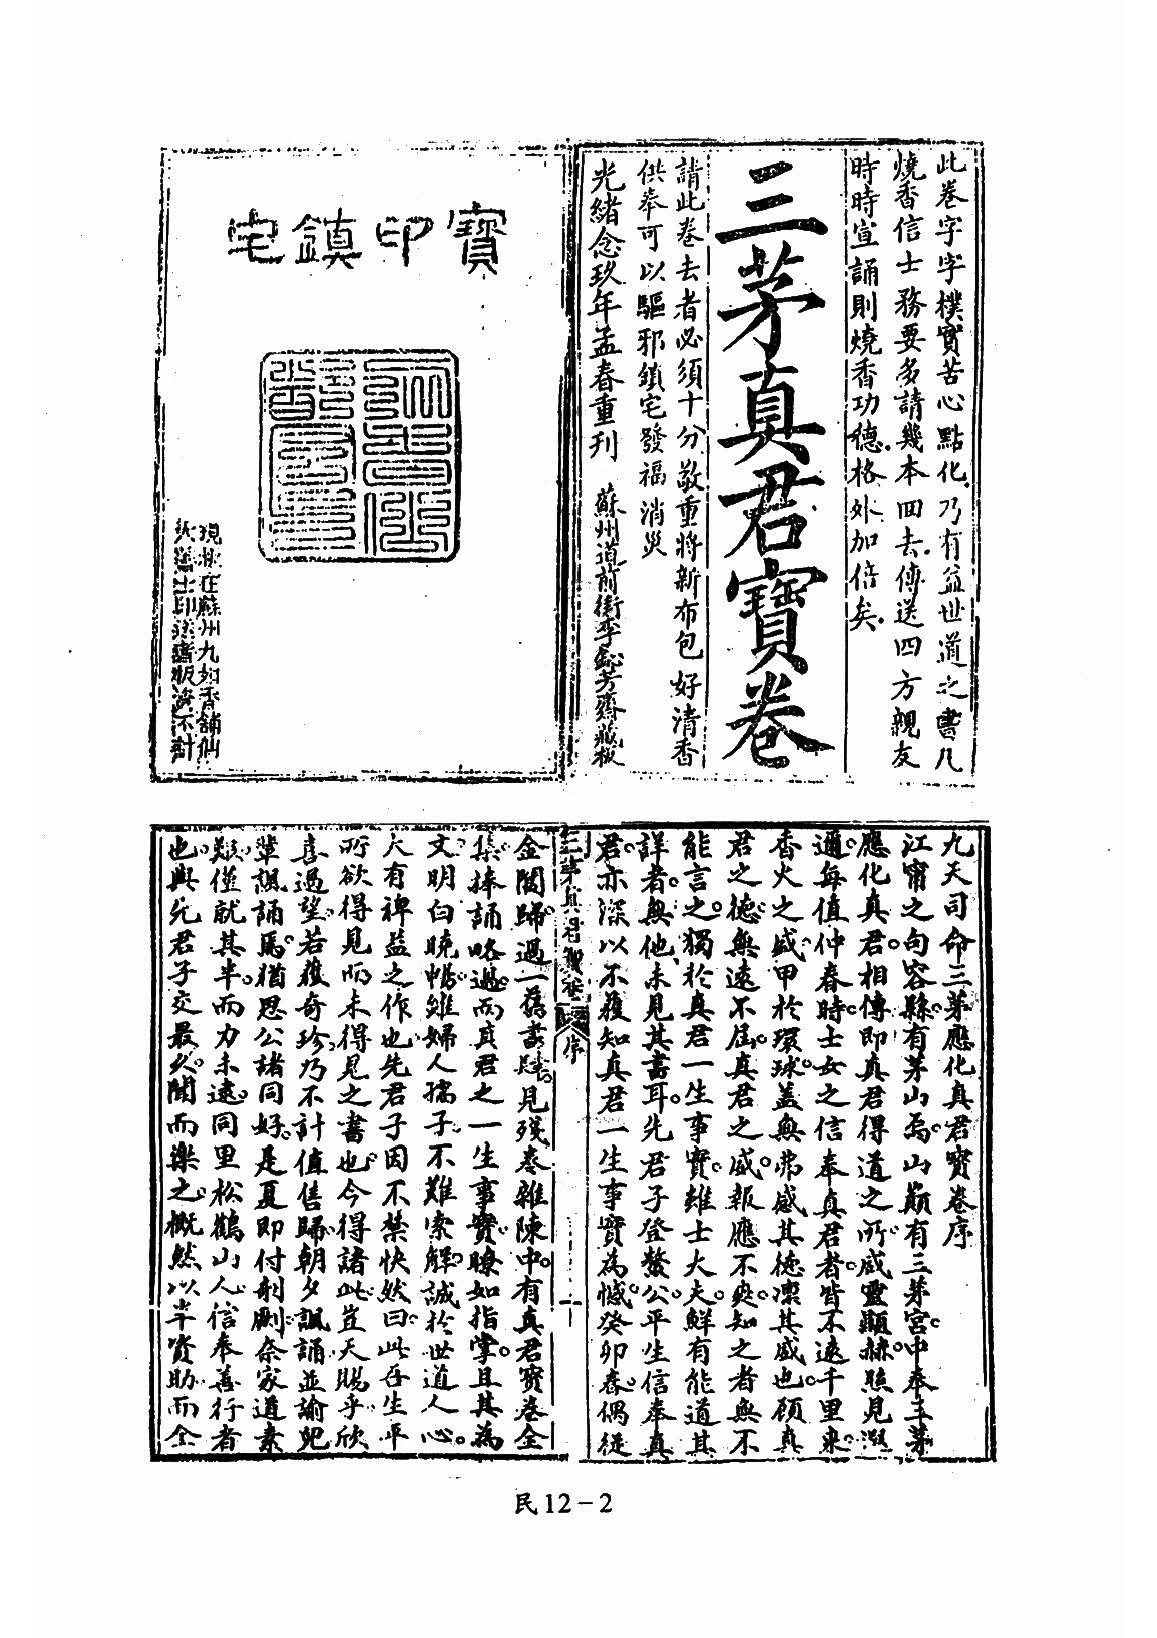 Front page San Mao zhenjun baojuan.jpg